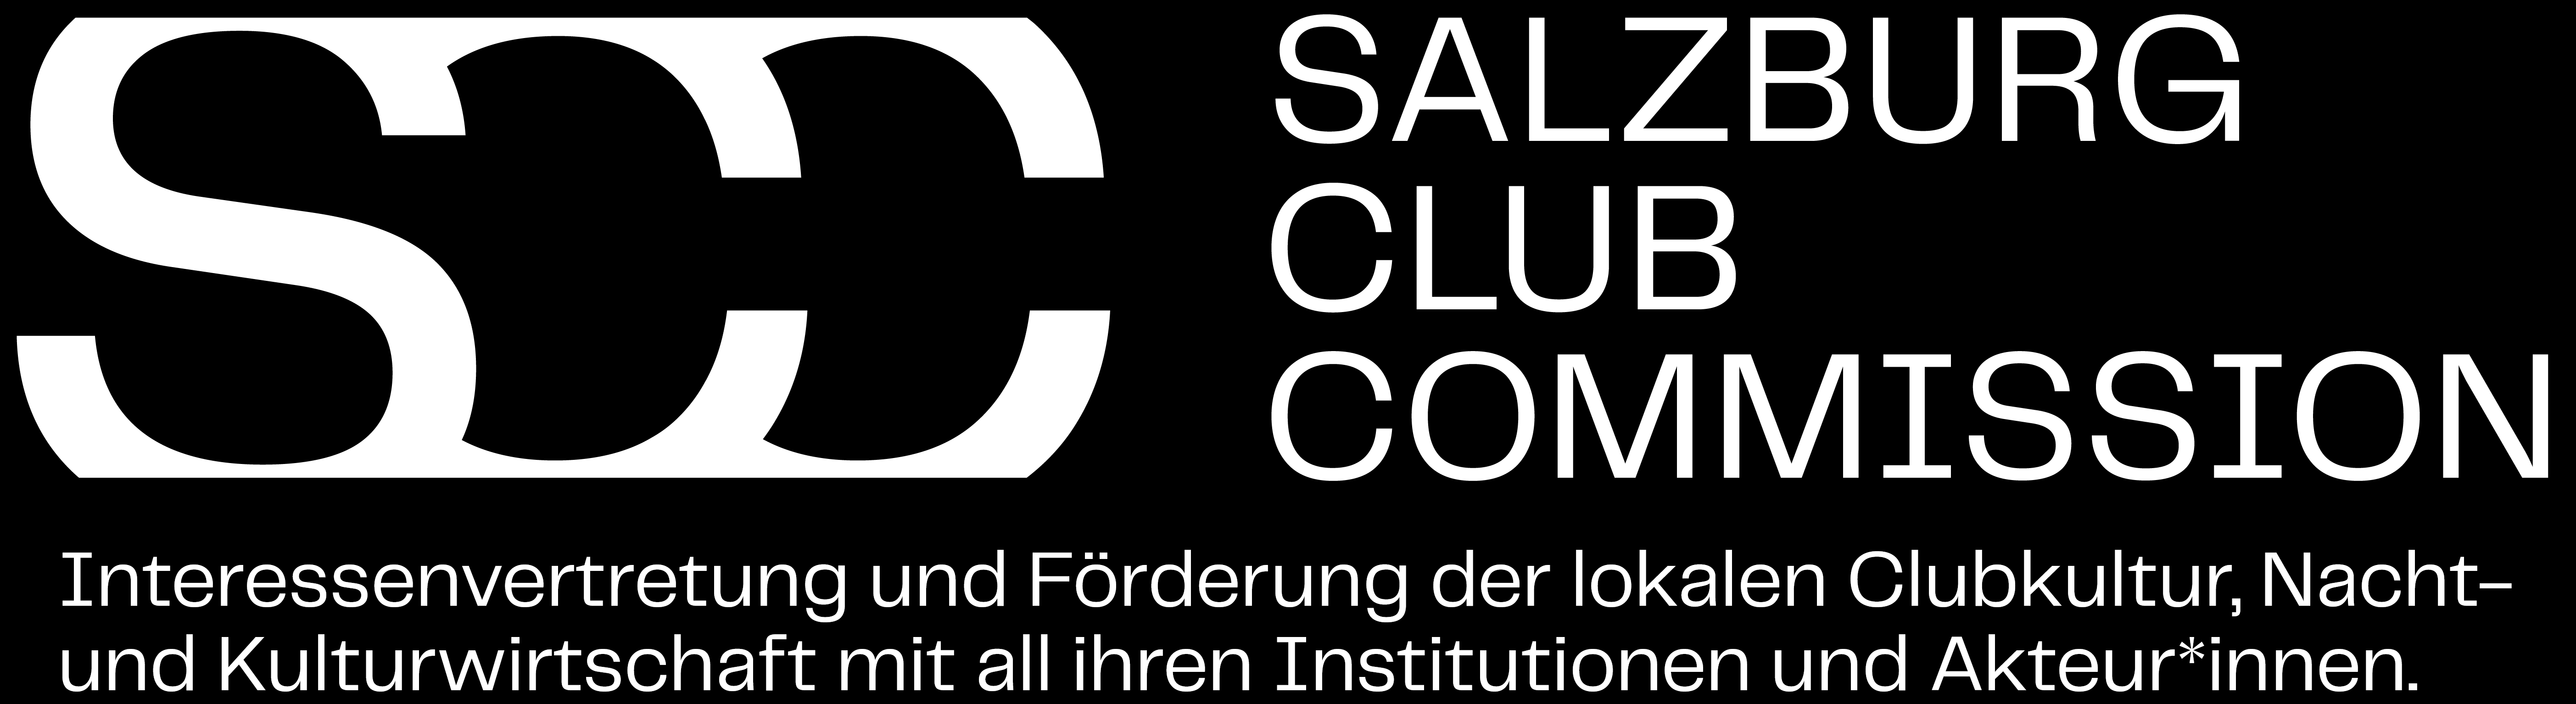 Salzburg Club Commision